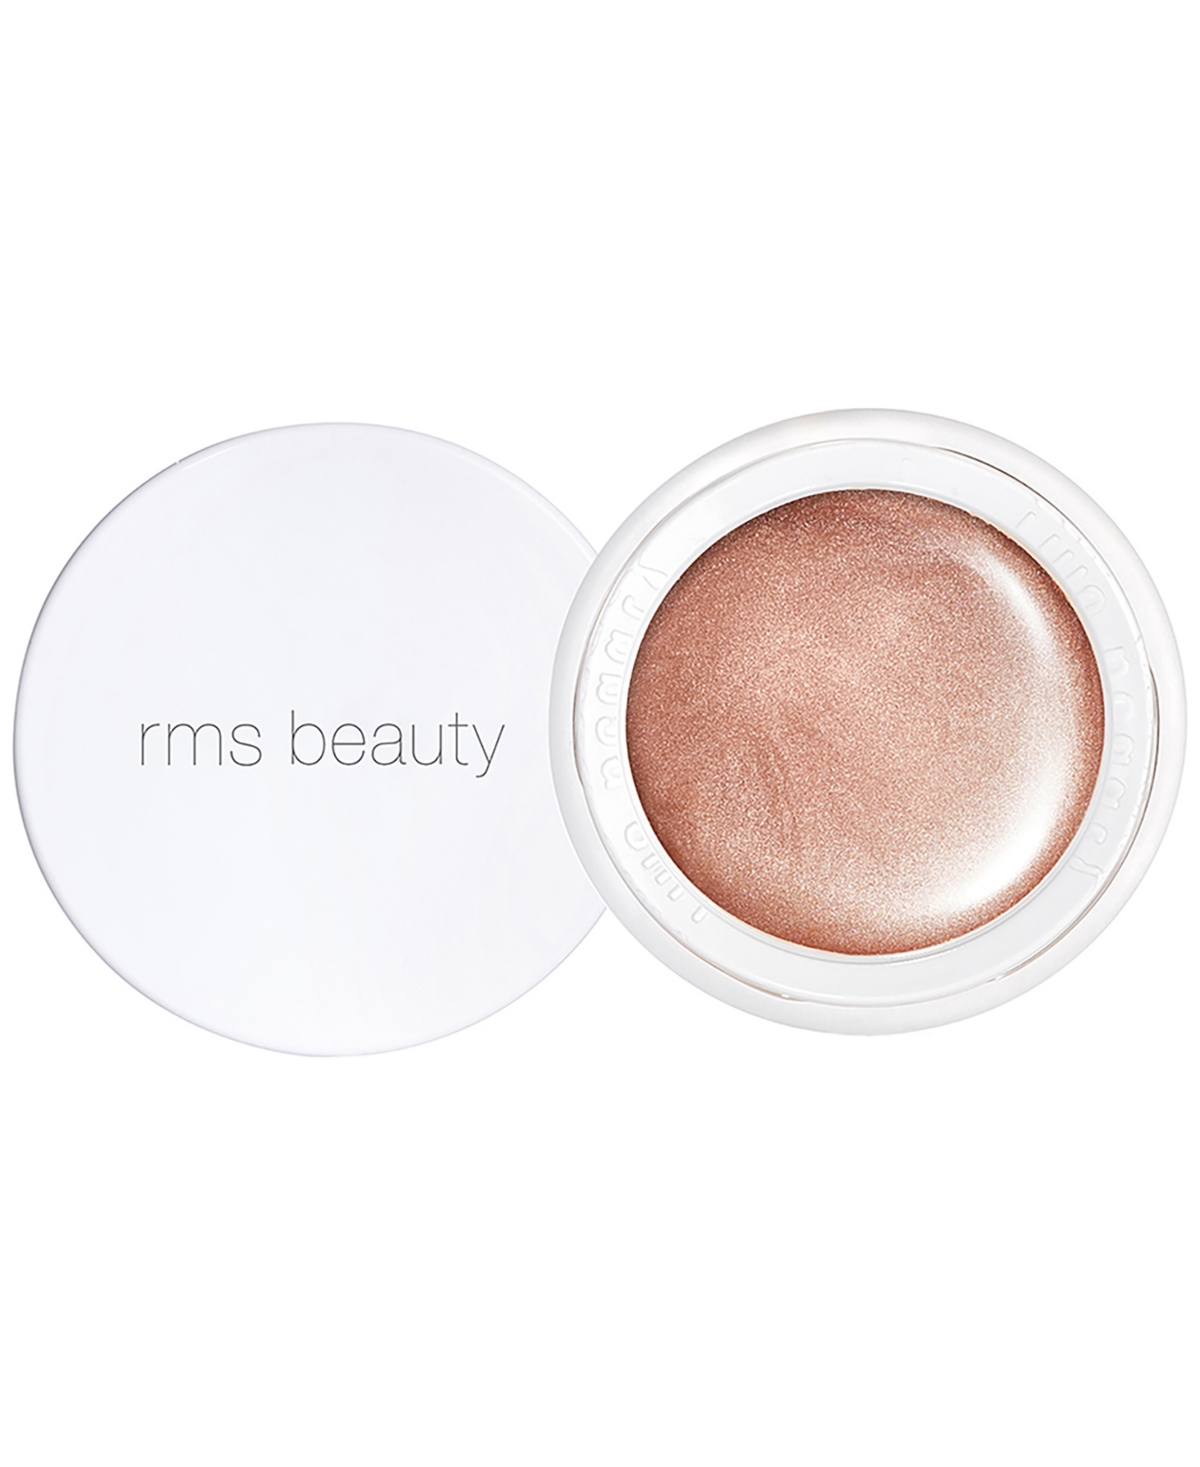 Rms Beauty Peach Luminizer